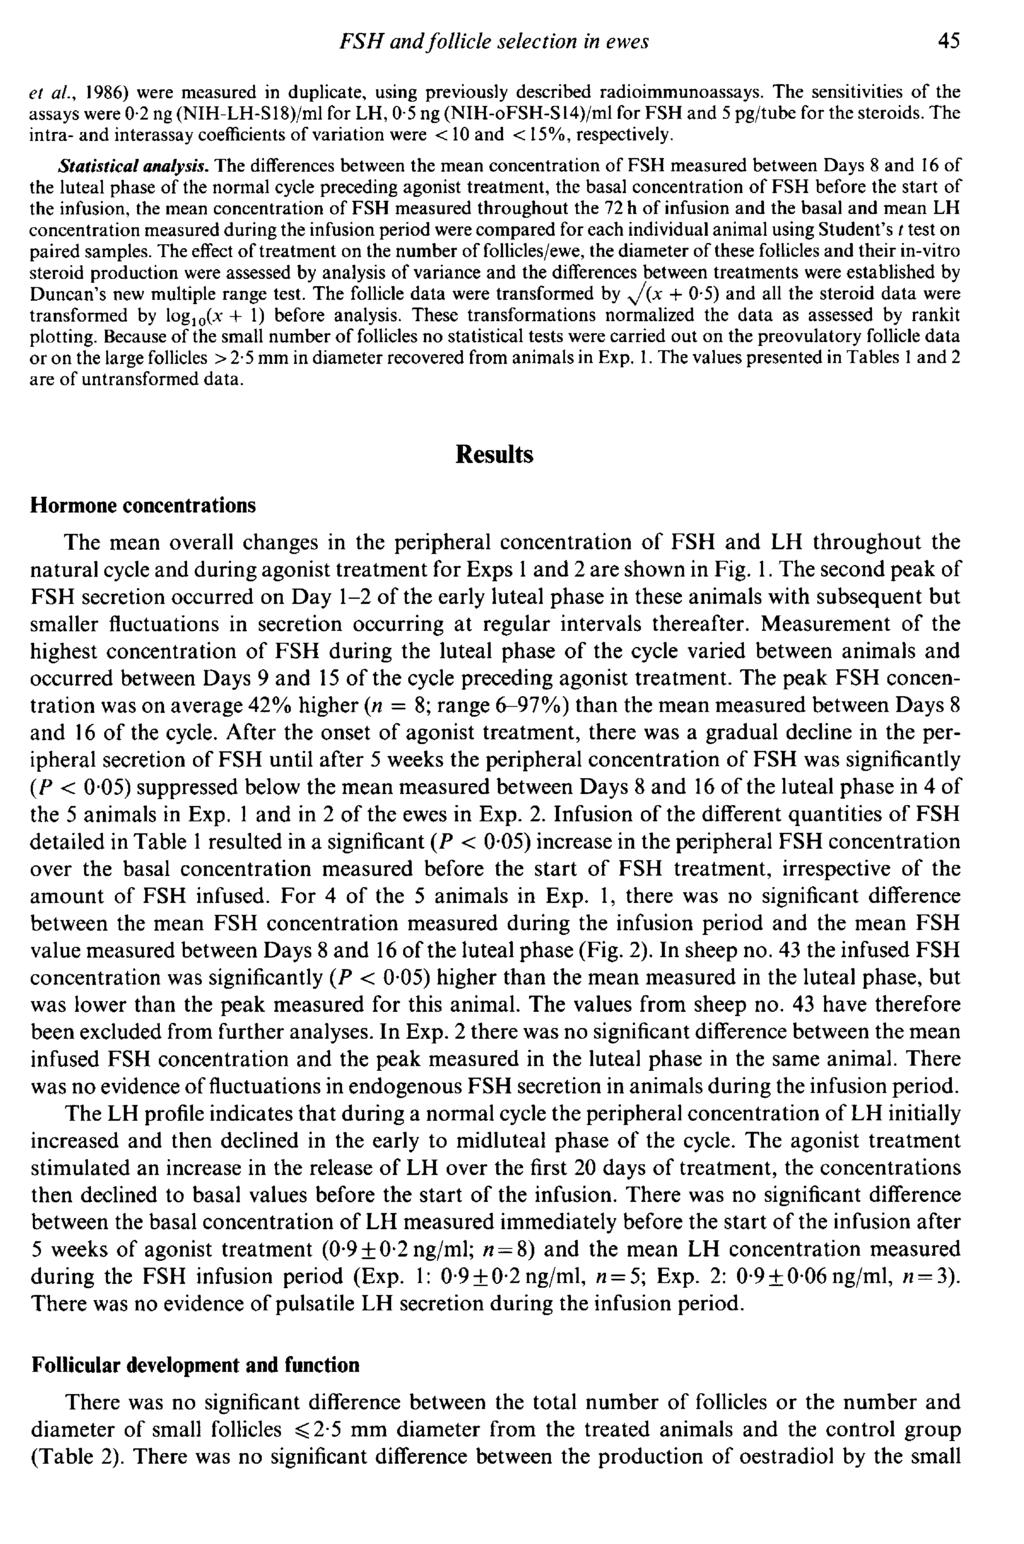 et al, 1986) were measured in duplicate, using previously described radioimmunoassays.